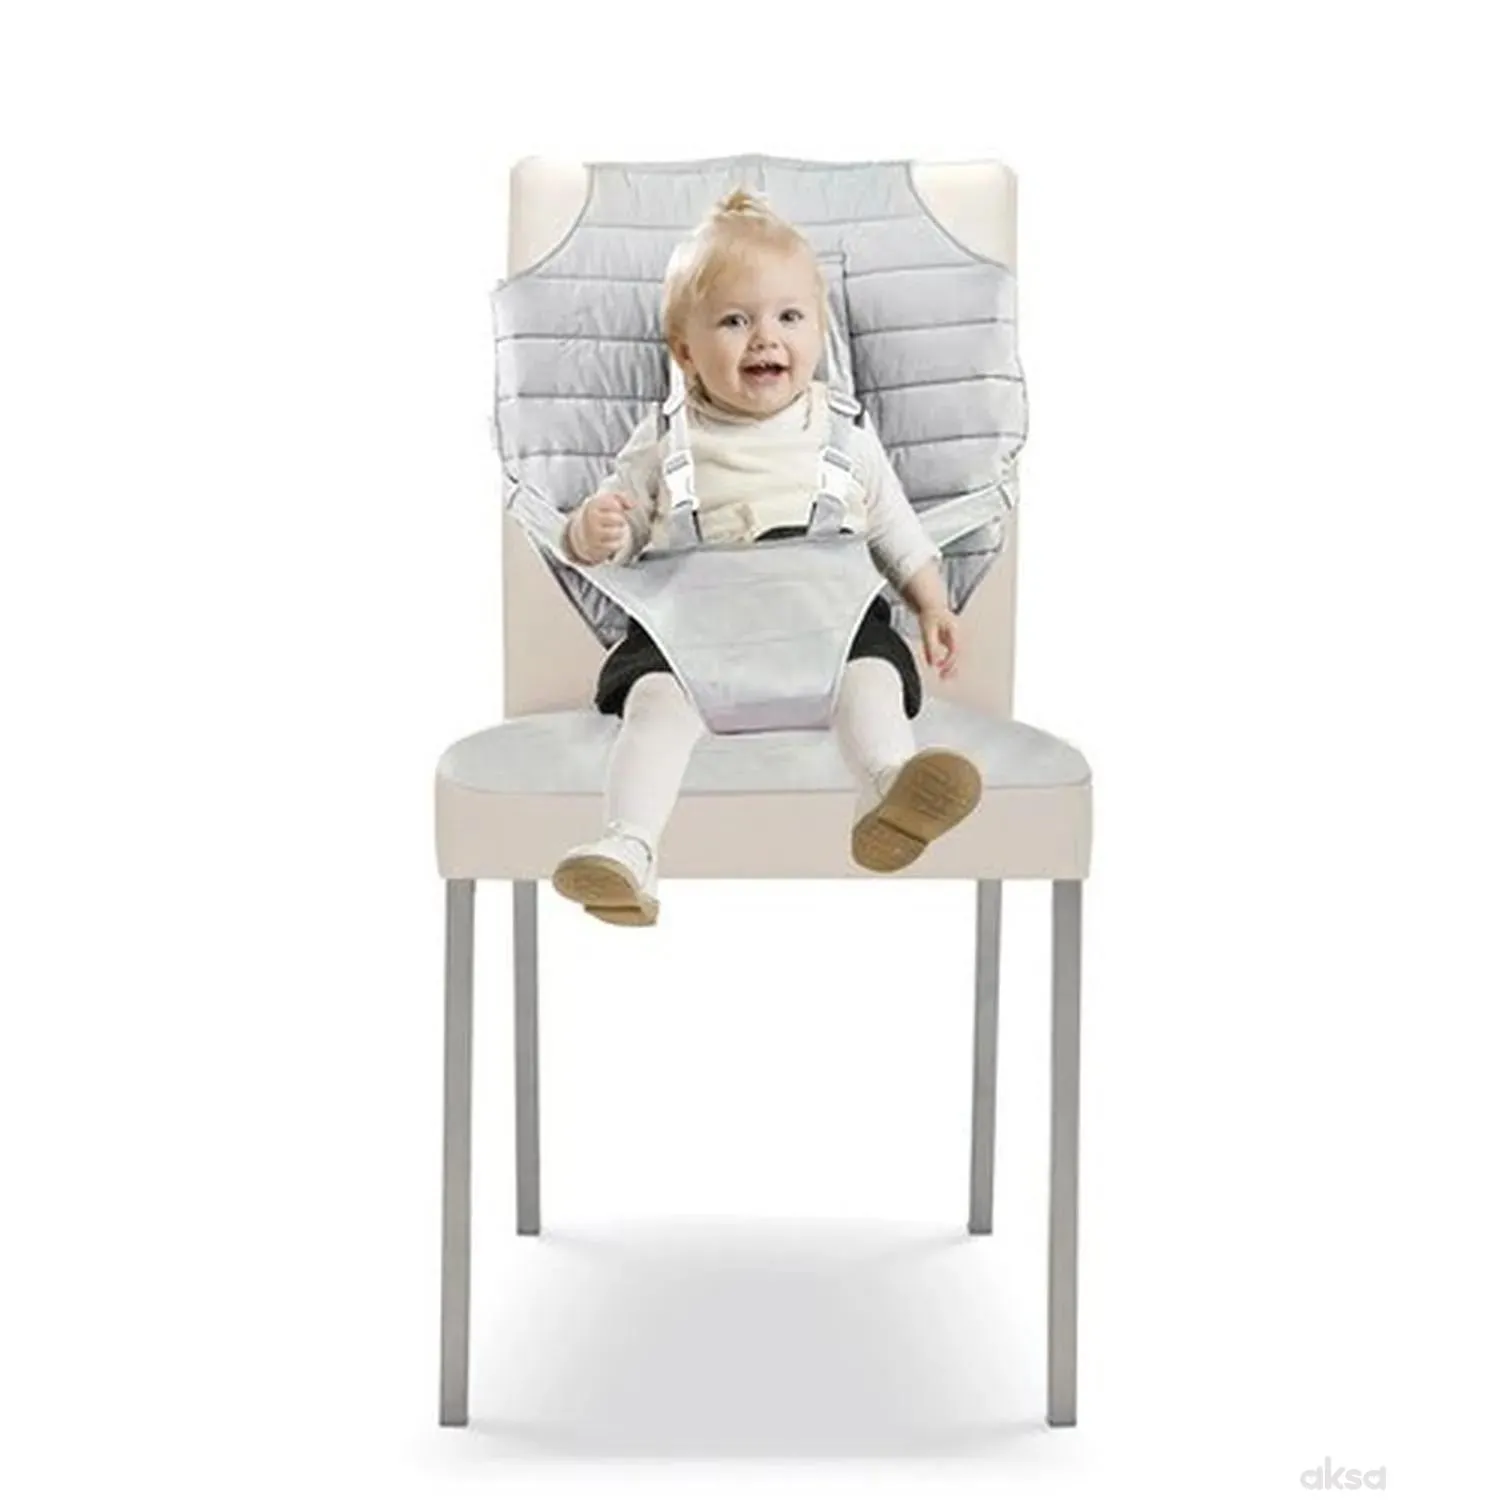 BJ višenamjenska mobilna stolica za bebu 553 